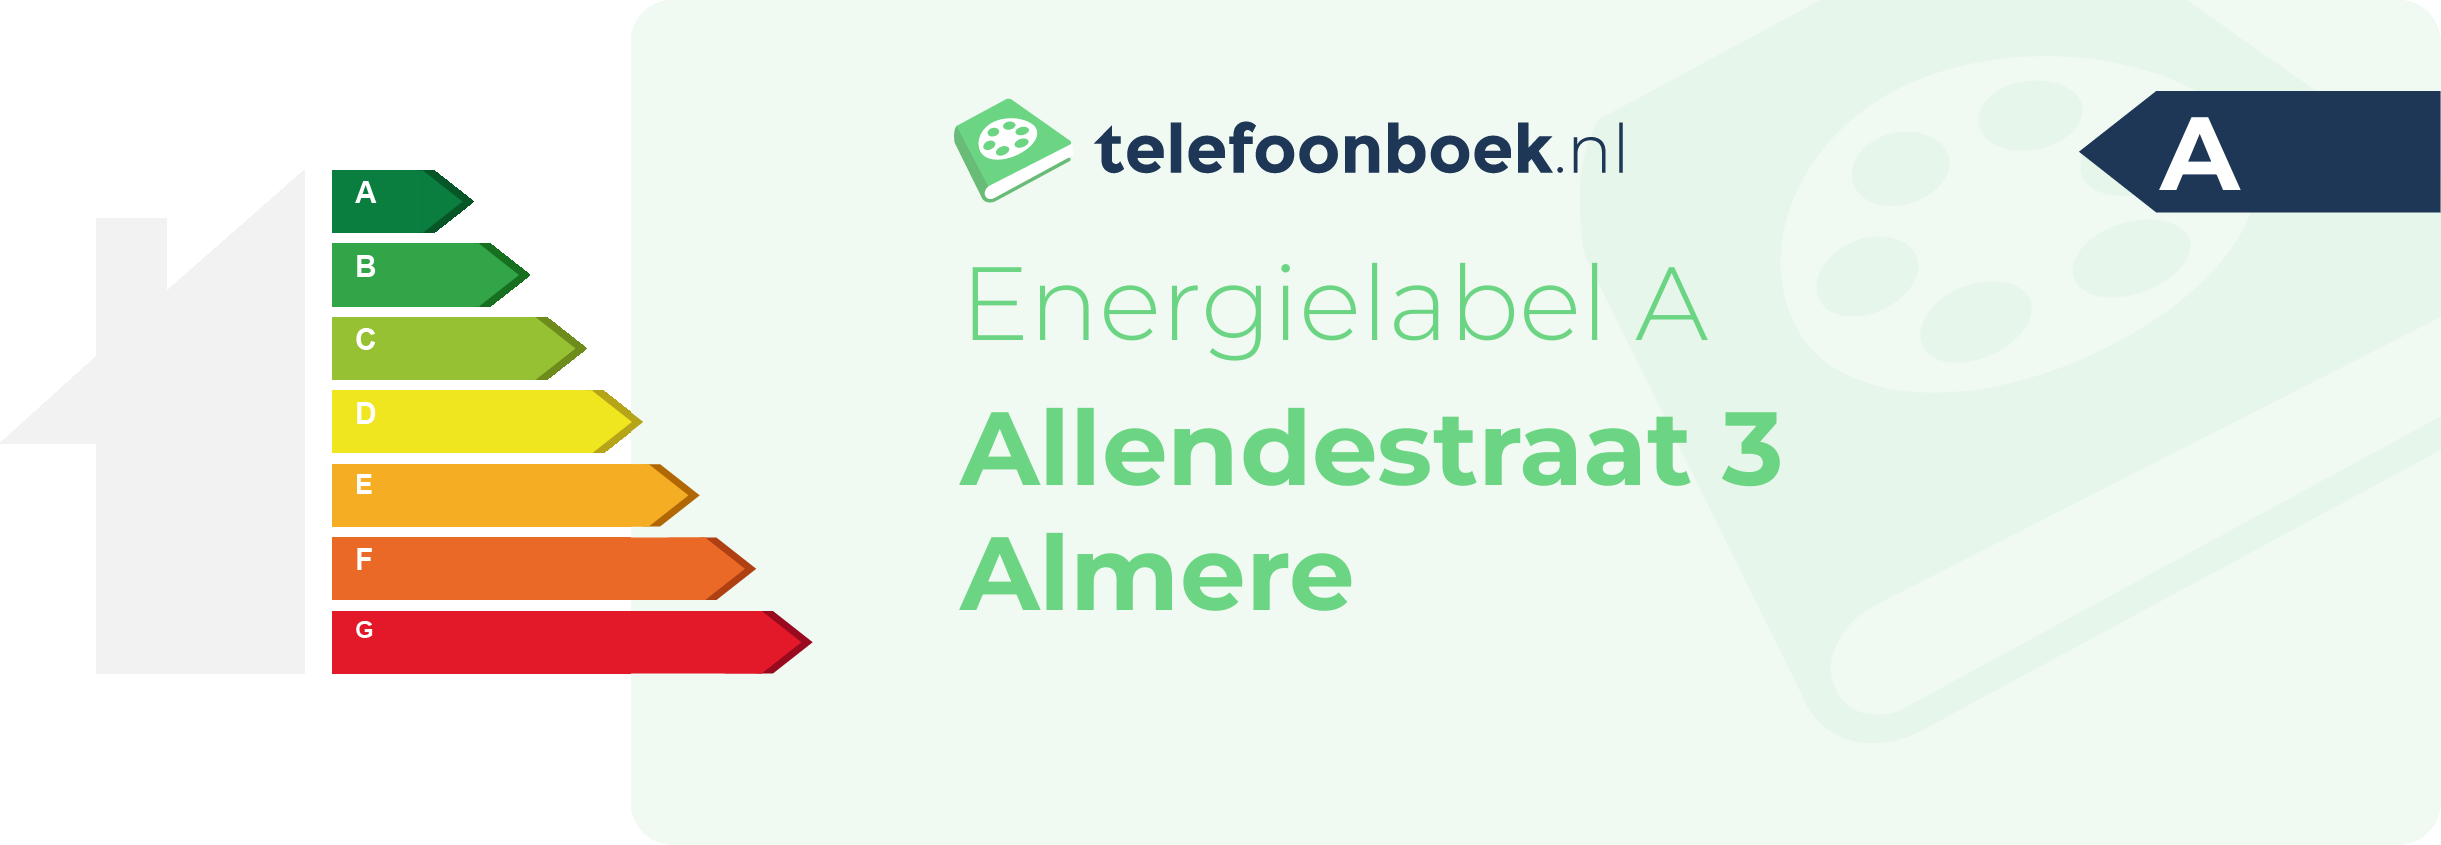 Energielabel Allendestraat 3 Almere